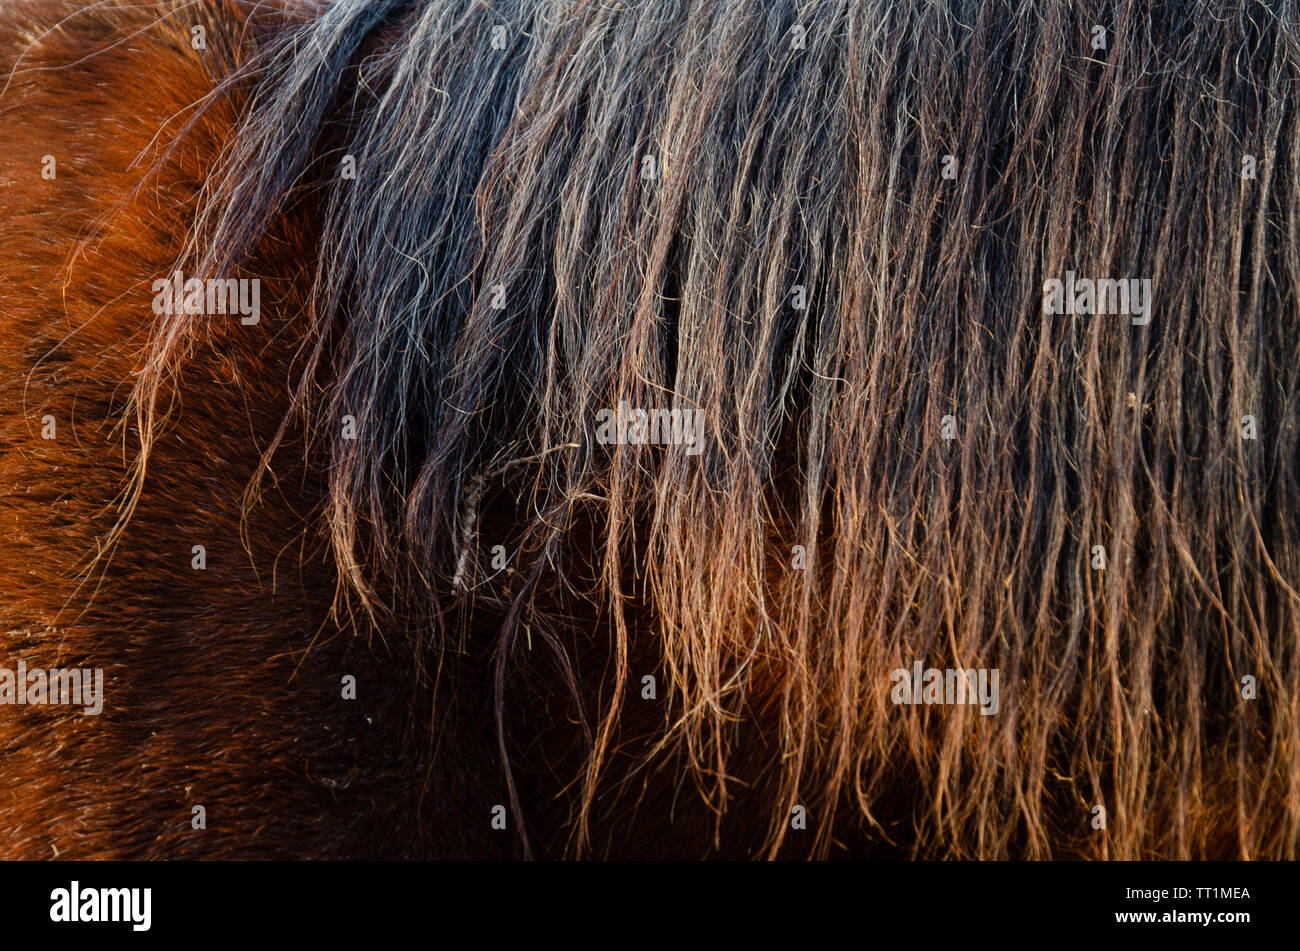 Closeup of horse hair pattern Stock Photo